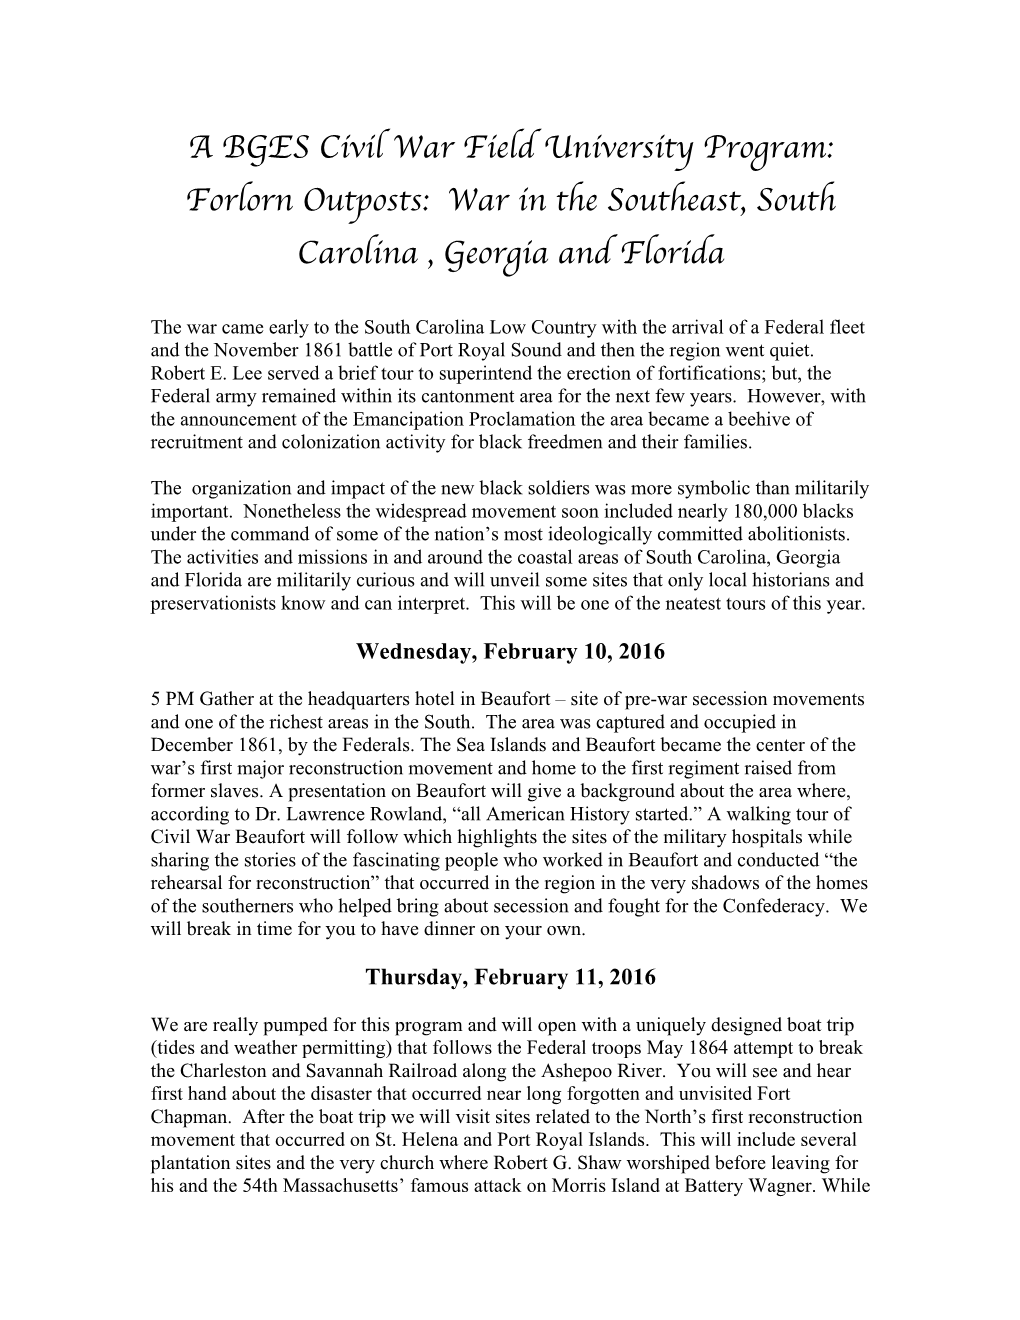 A BGES Civil War Field University Program: Forlorn Outposts: War in the Southeast, South Carolina , Georgia and Florida